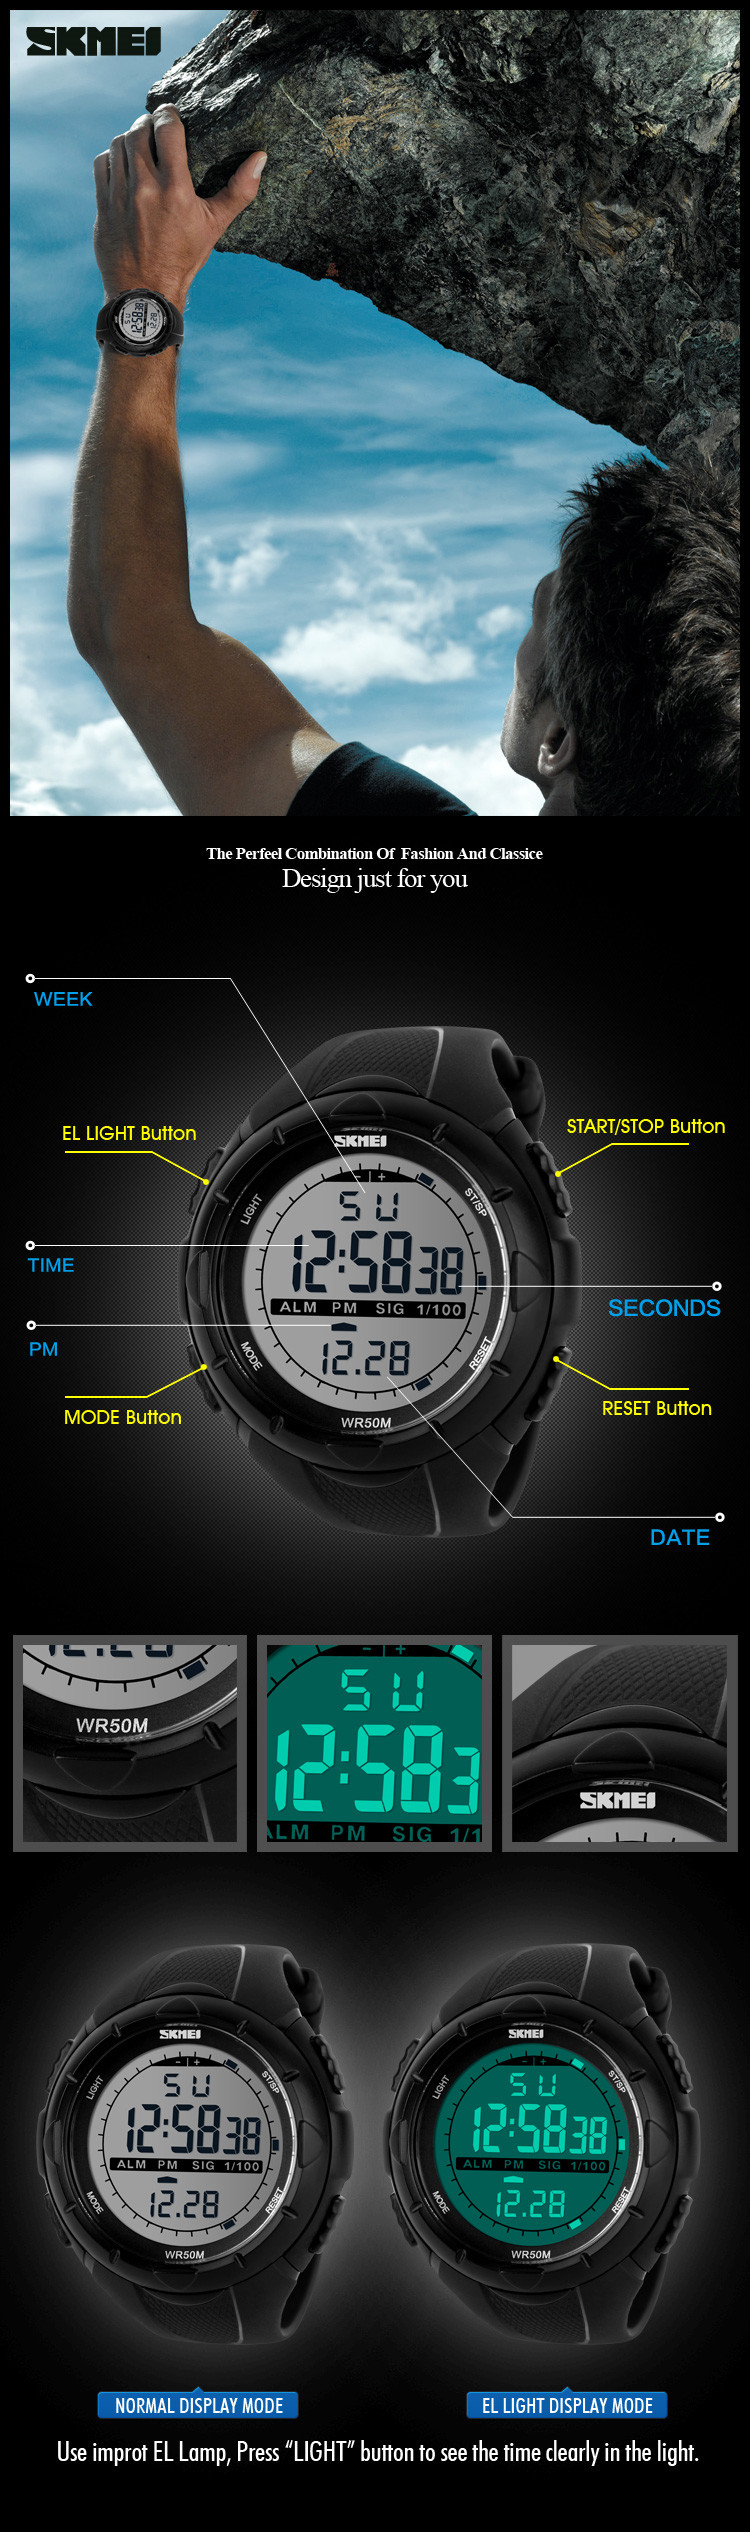 Skmei 1025 high quality wrist watch for business cheapest relojes original mens casual watches